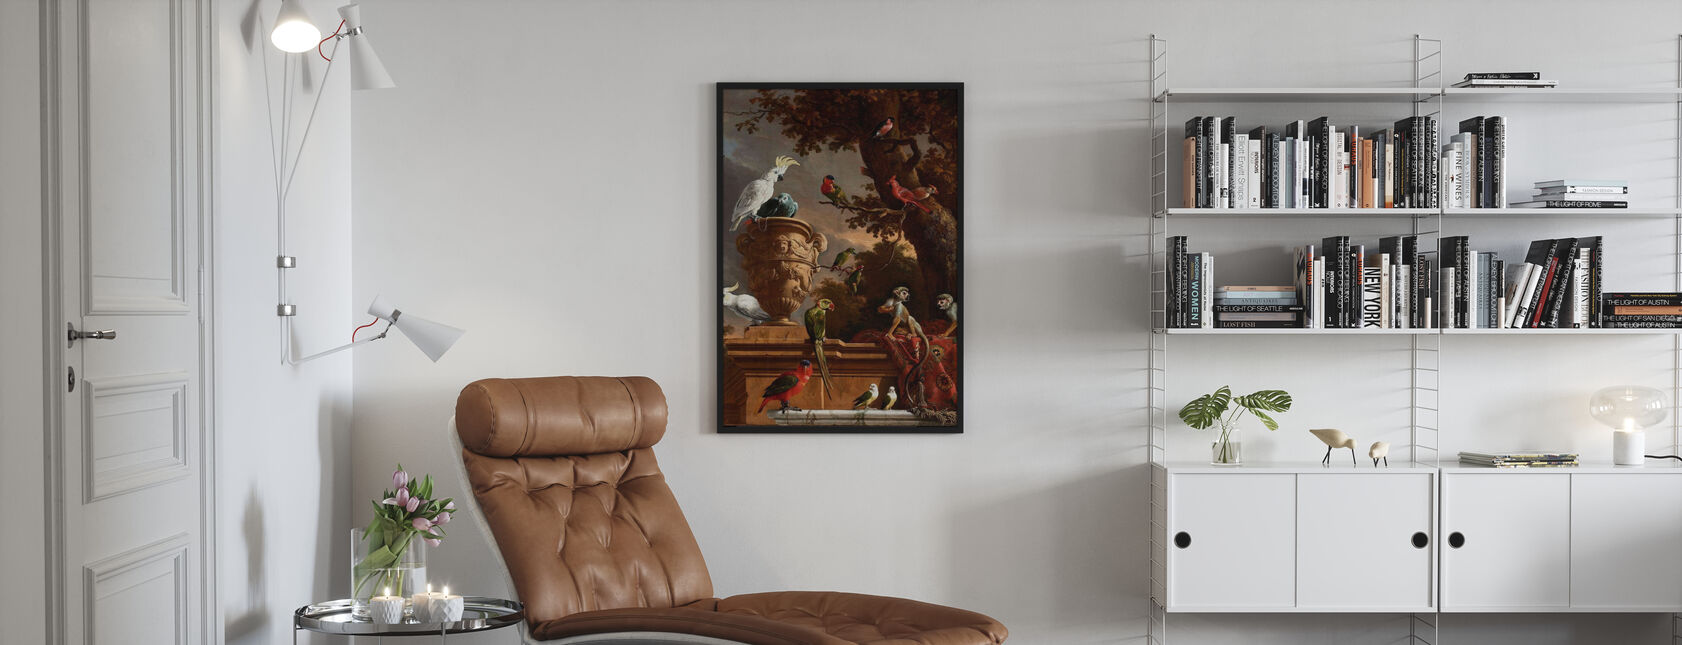 Menagerie - Melchior D'Hondecoeter - Poster - Living Room